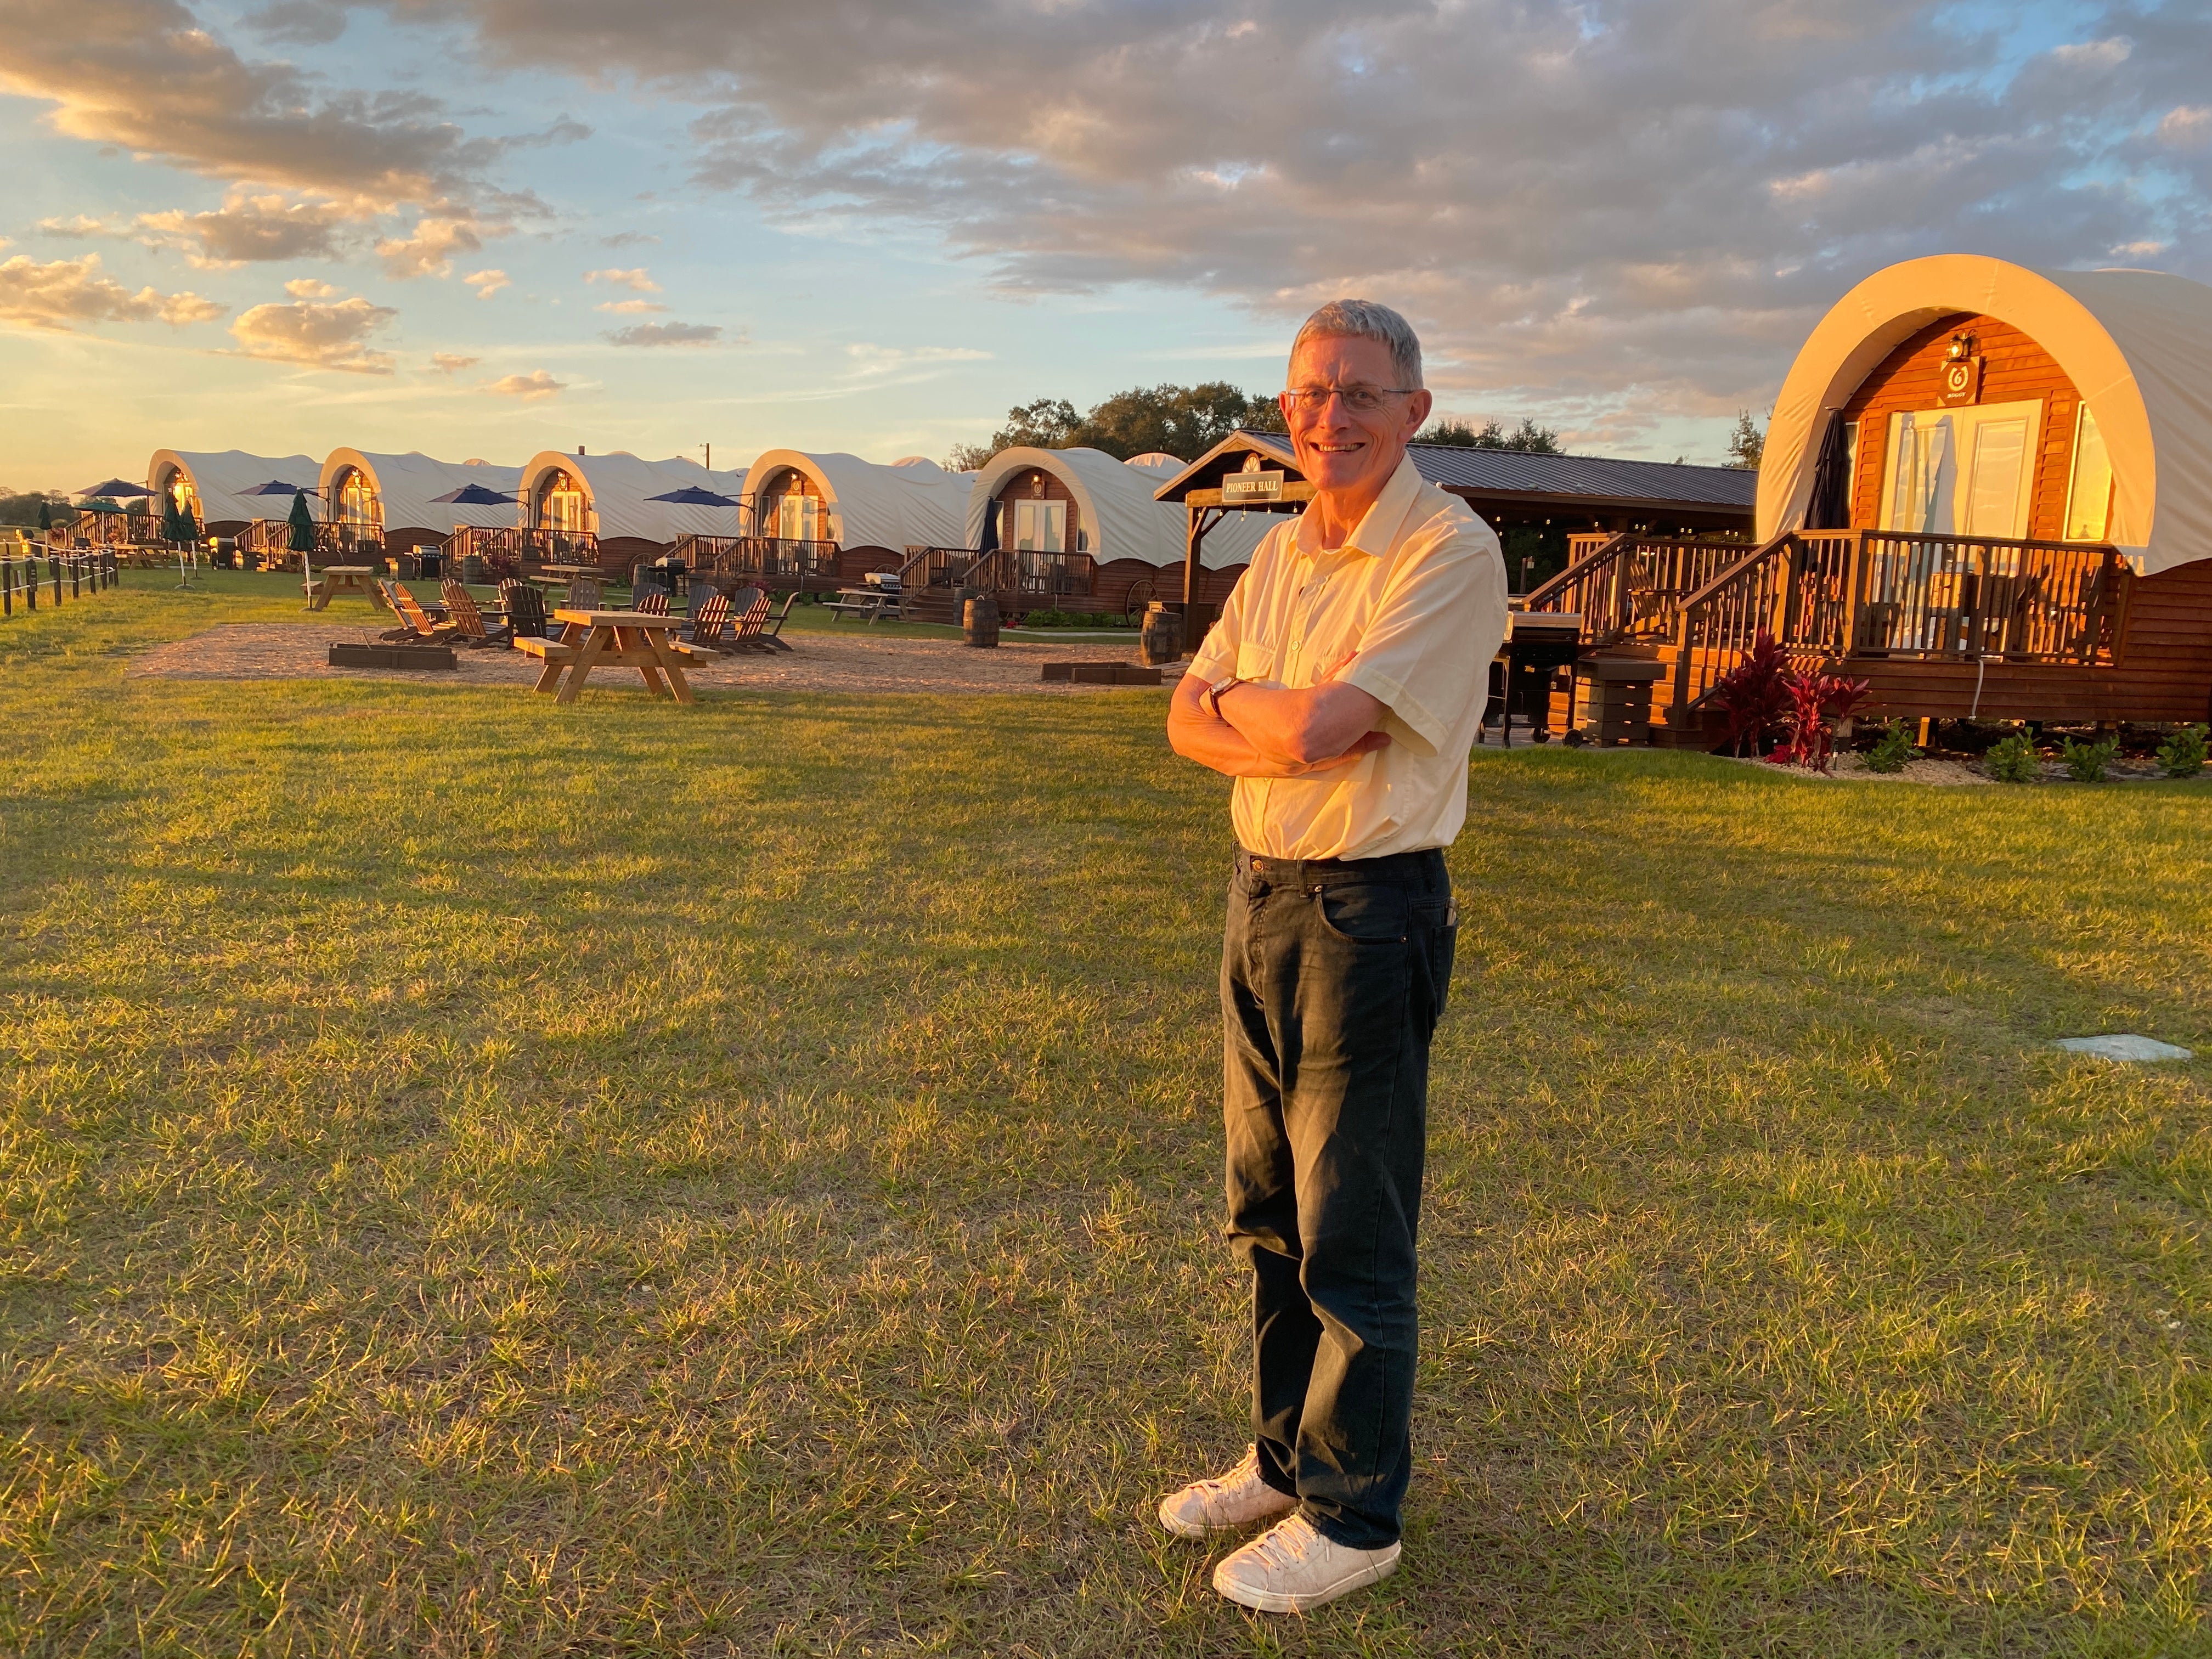 Home on the range: Simon Calder at Westgate River Ranch